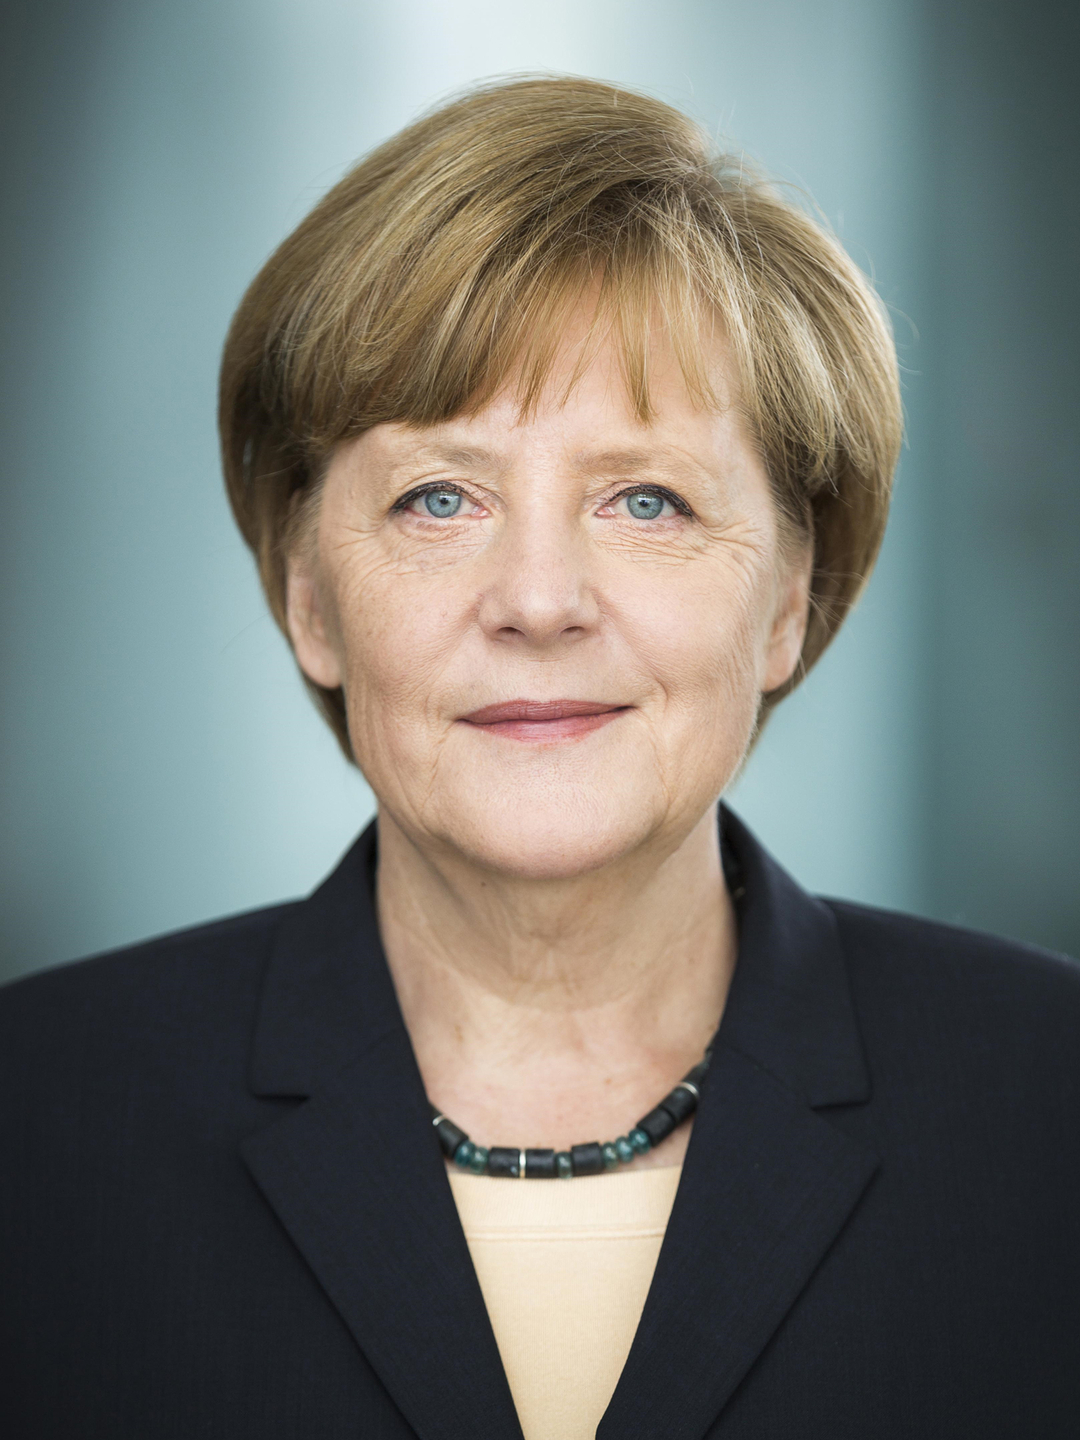 Angela Merkel upbringing